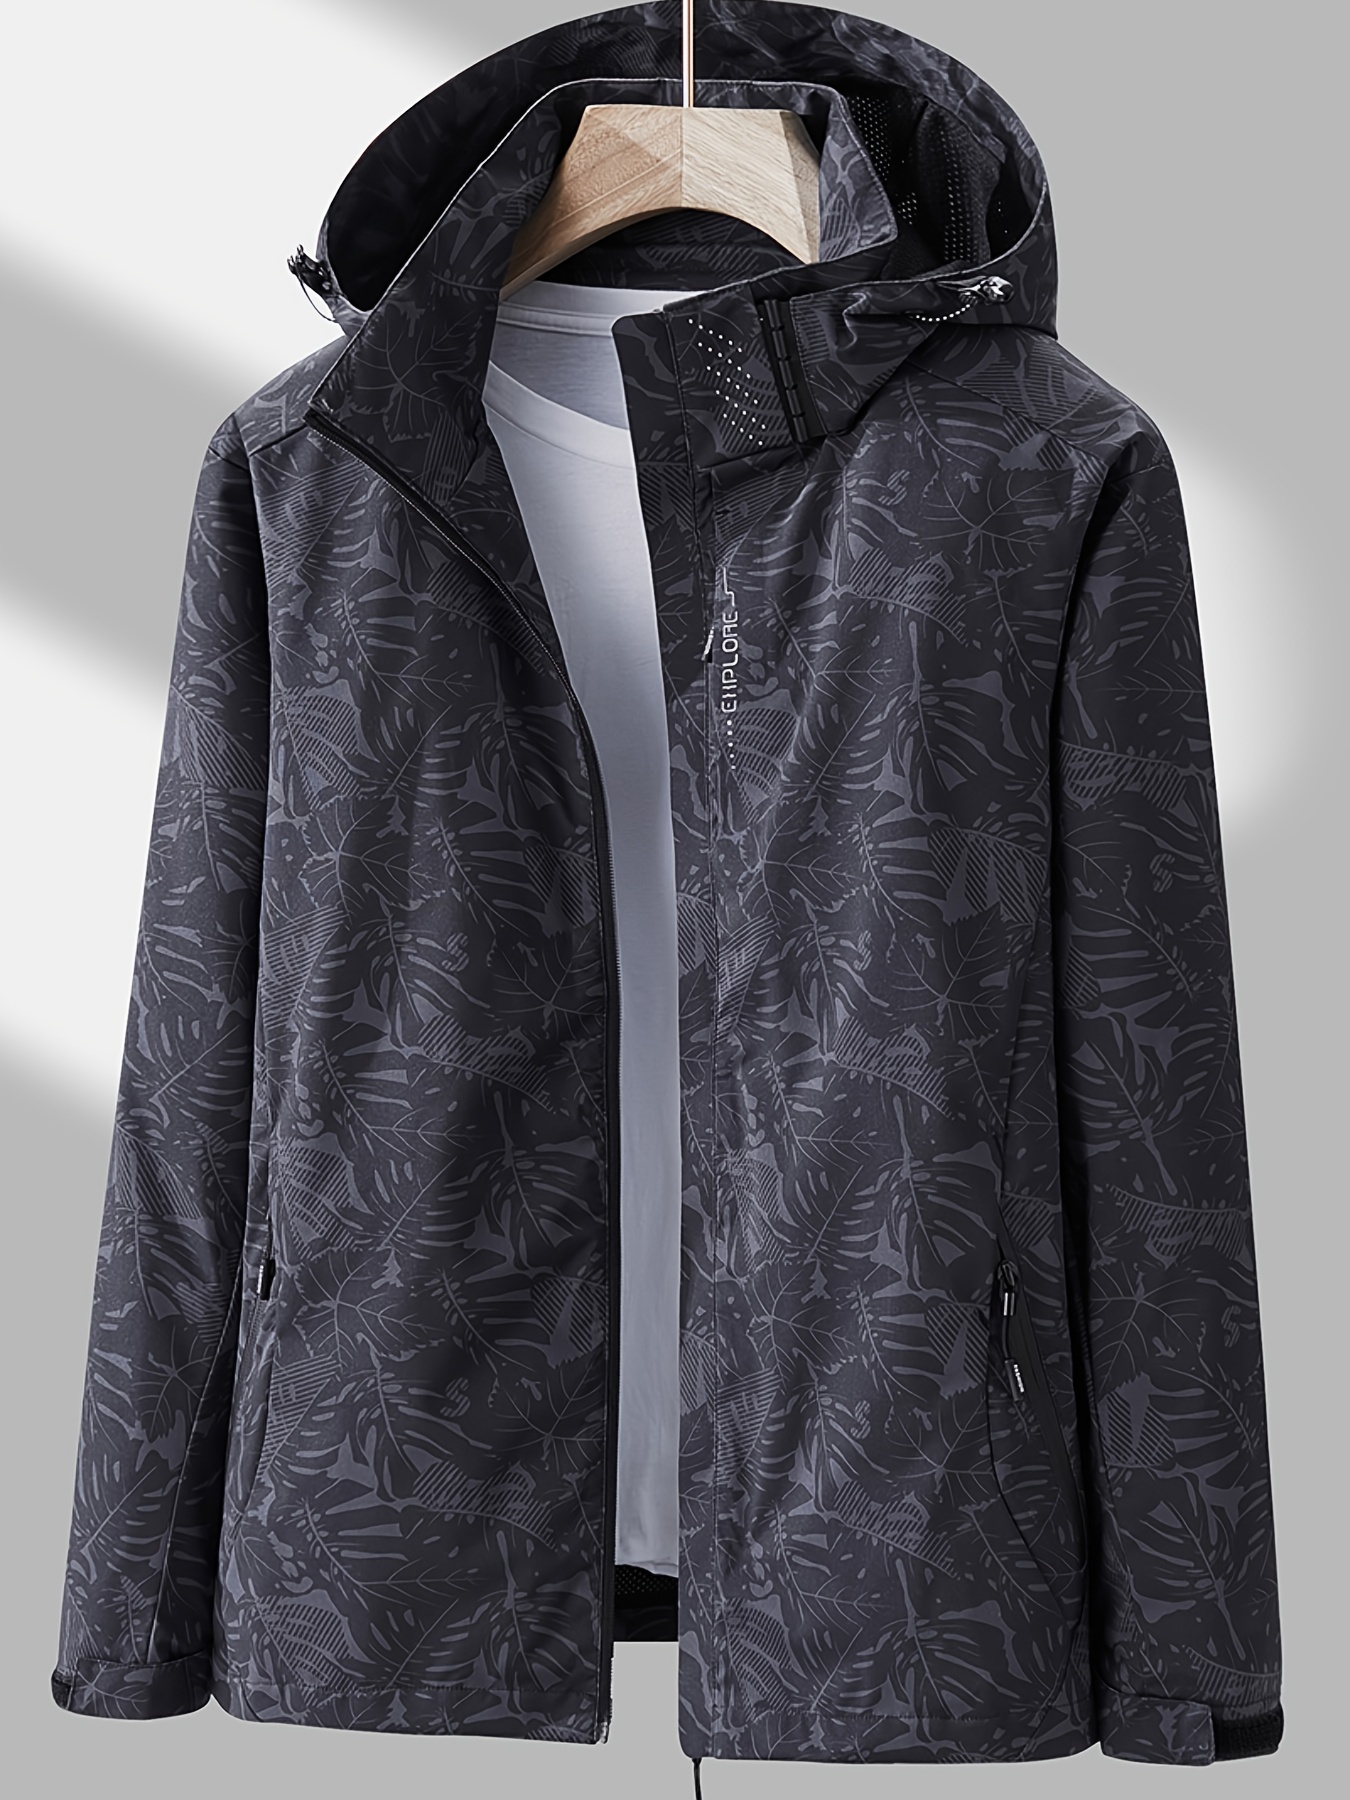 women's camouflage outdoor jacket: windproof & rainproof with removable hood - perfect for outdoor adventures! black 0